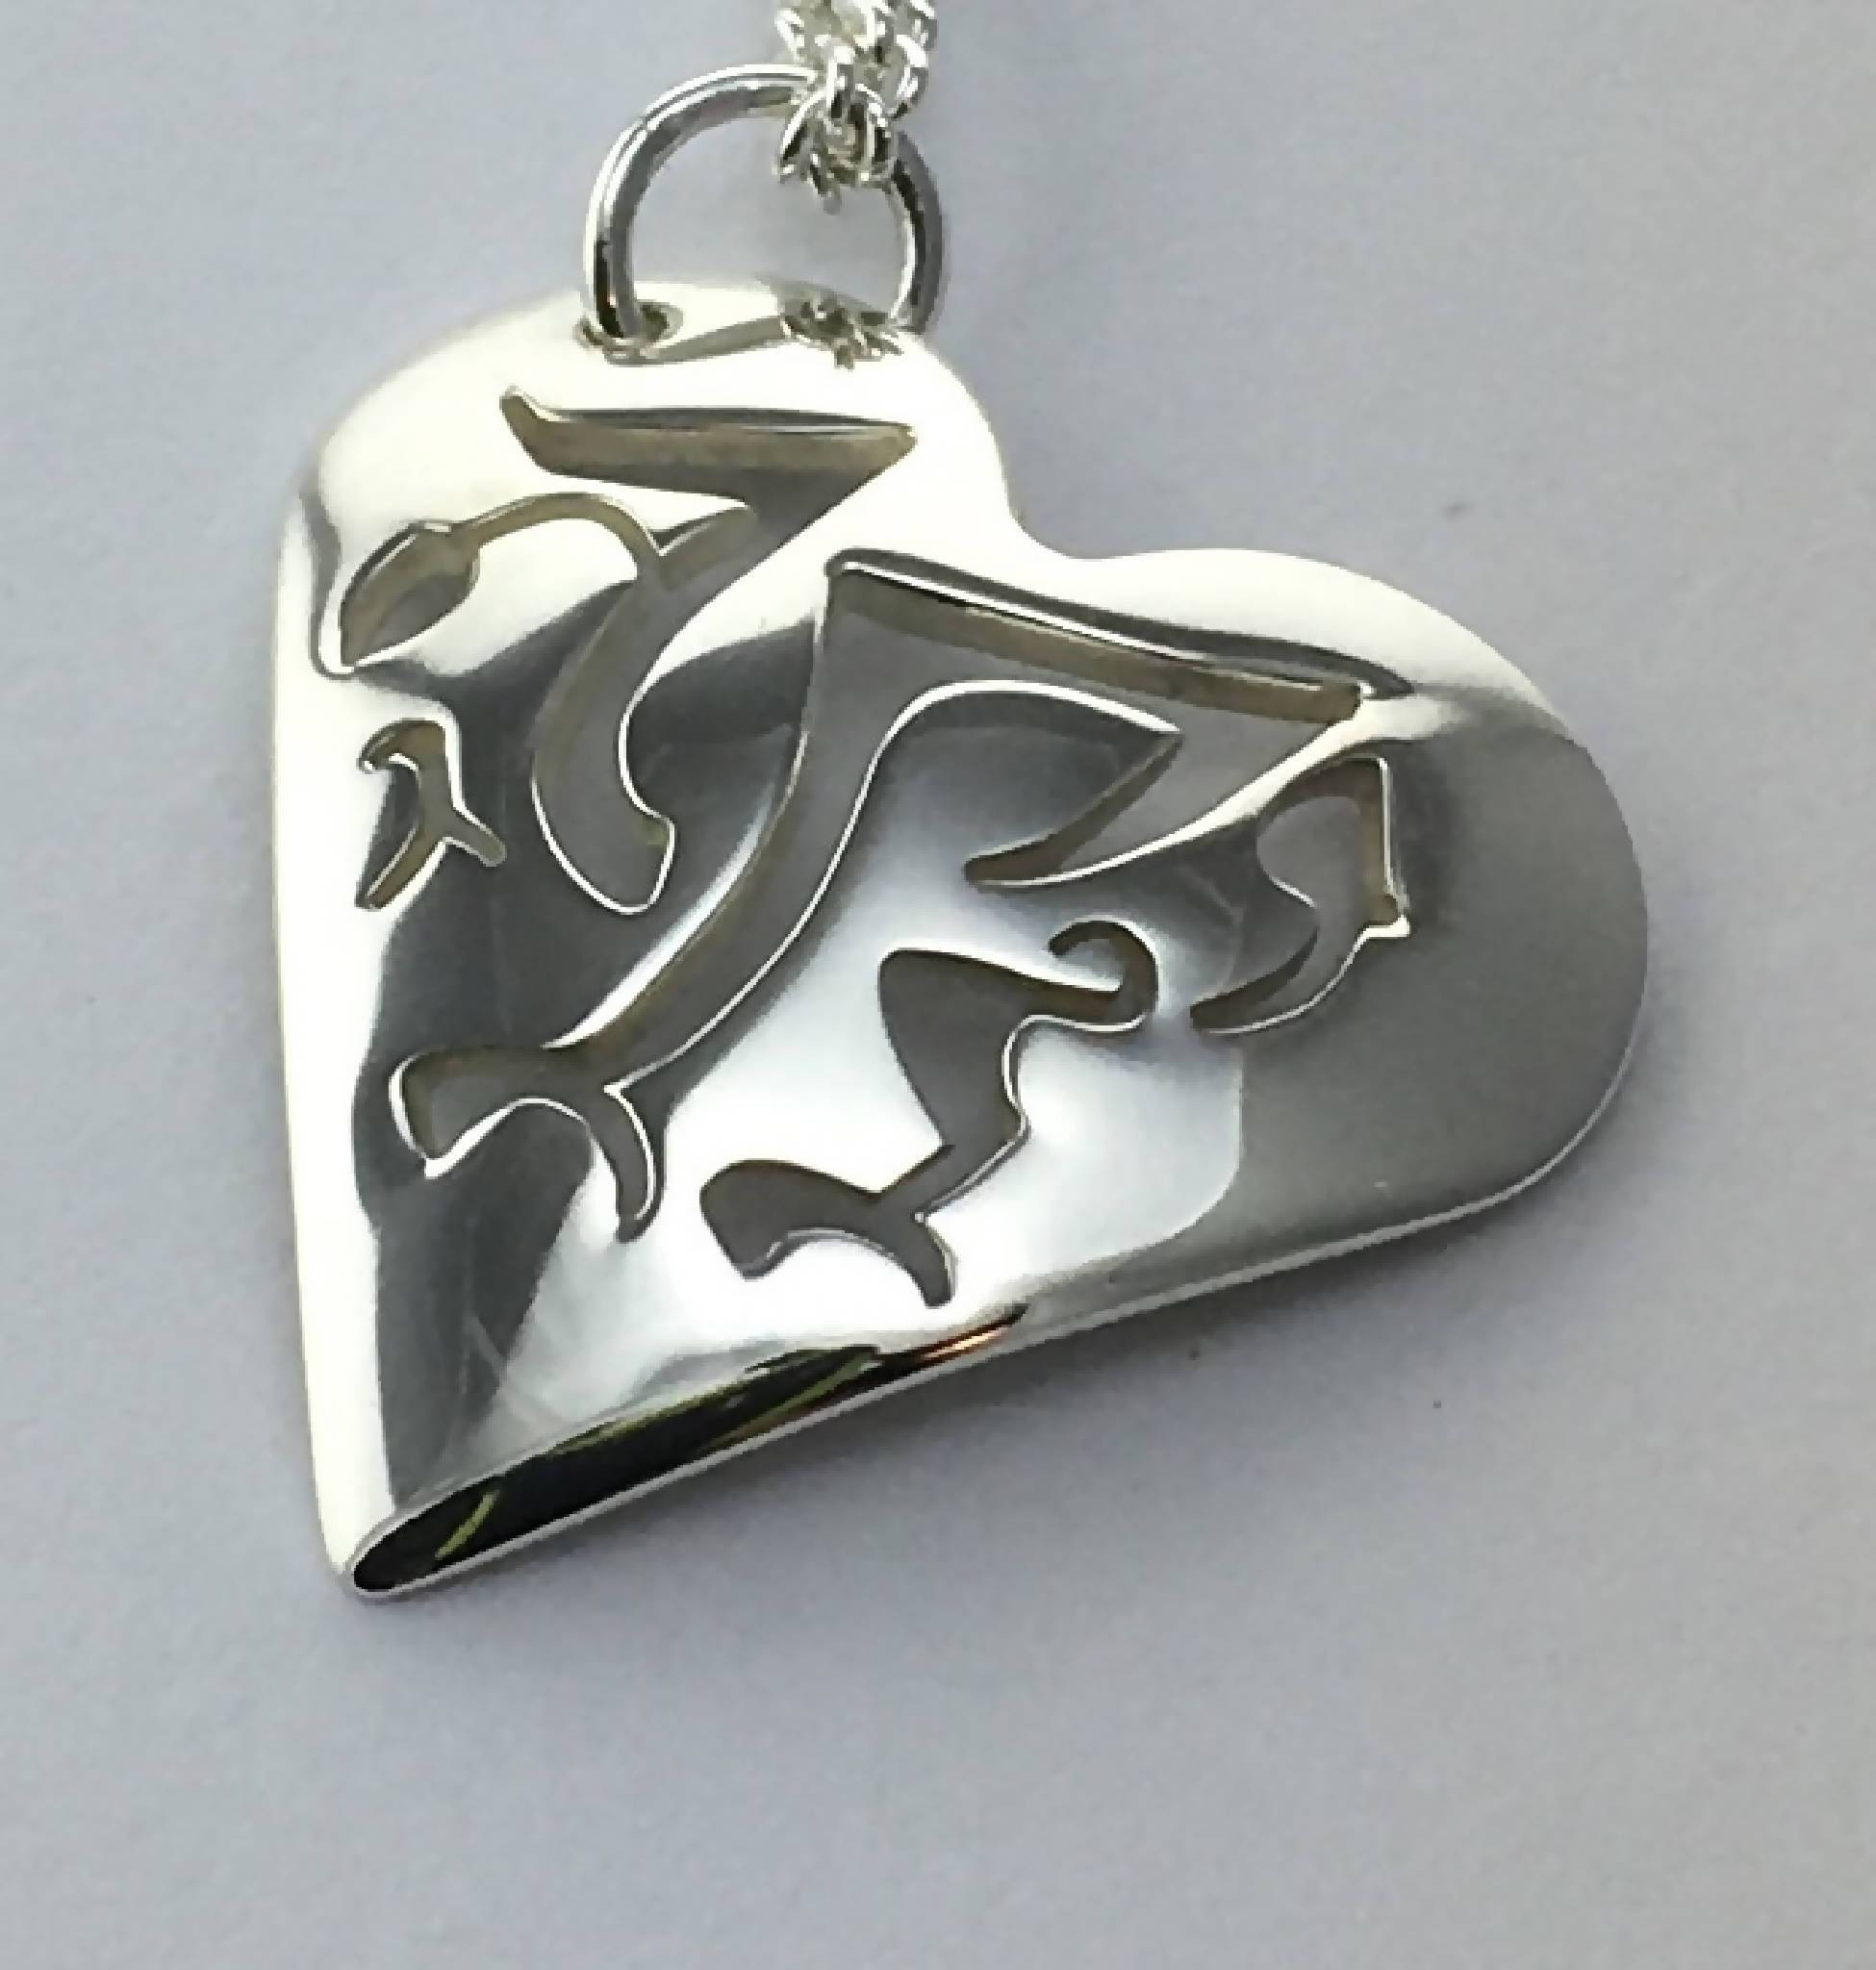 Small Welsh Dragon heart shaped pendant